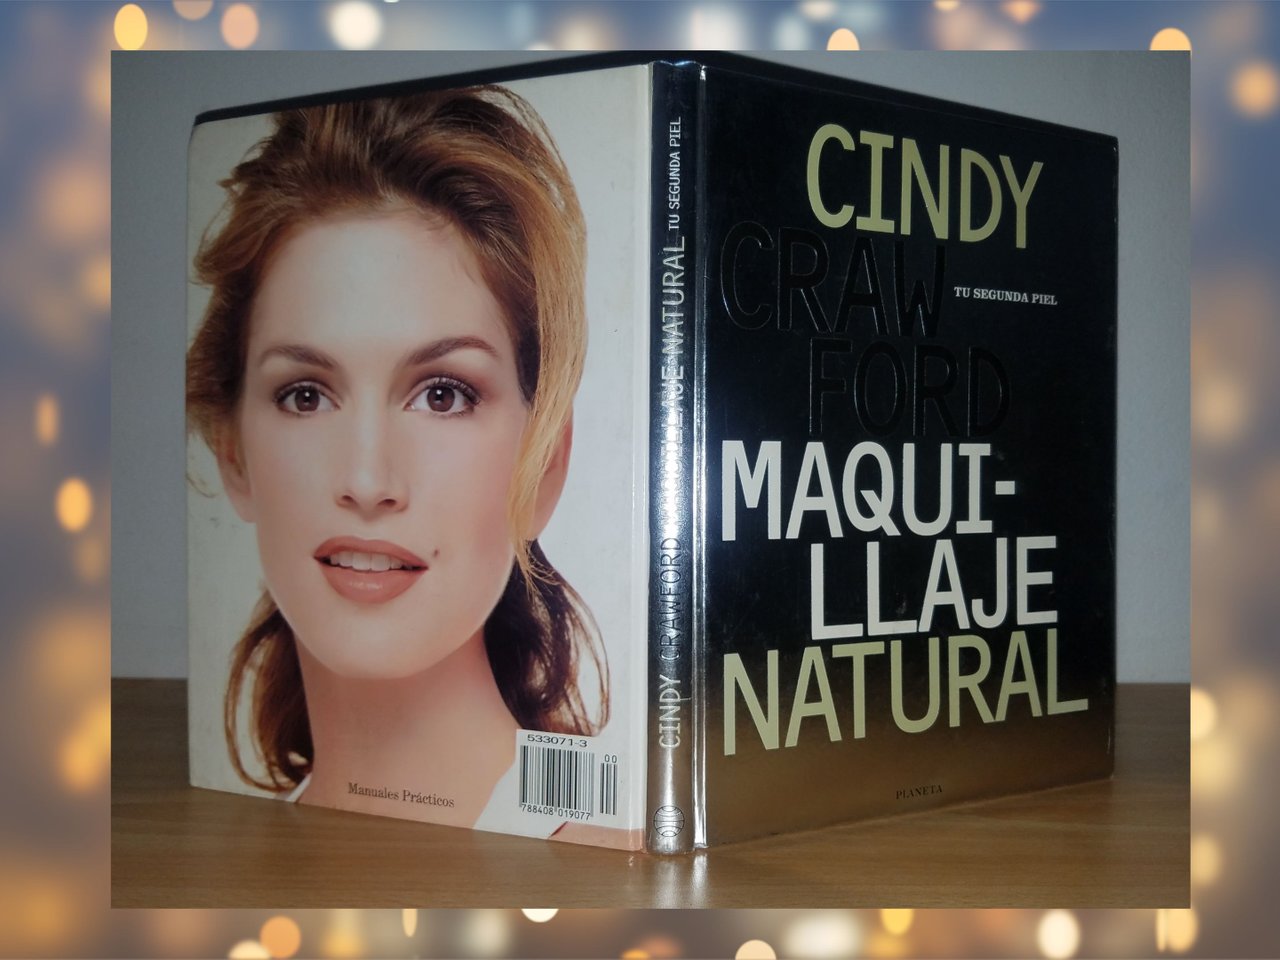 ESP//ENG) Reseña: Libro de Maquillaje de Cindy Crawford - Tu segunda Piel  // Review: Cindy Crawford's Makeup Book - Your Second Skin | PeakD